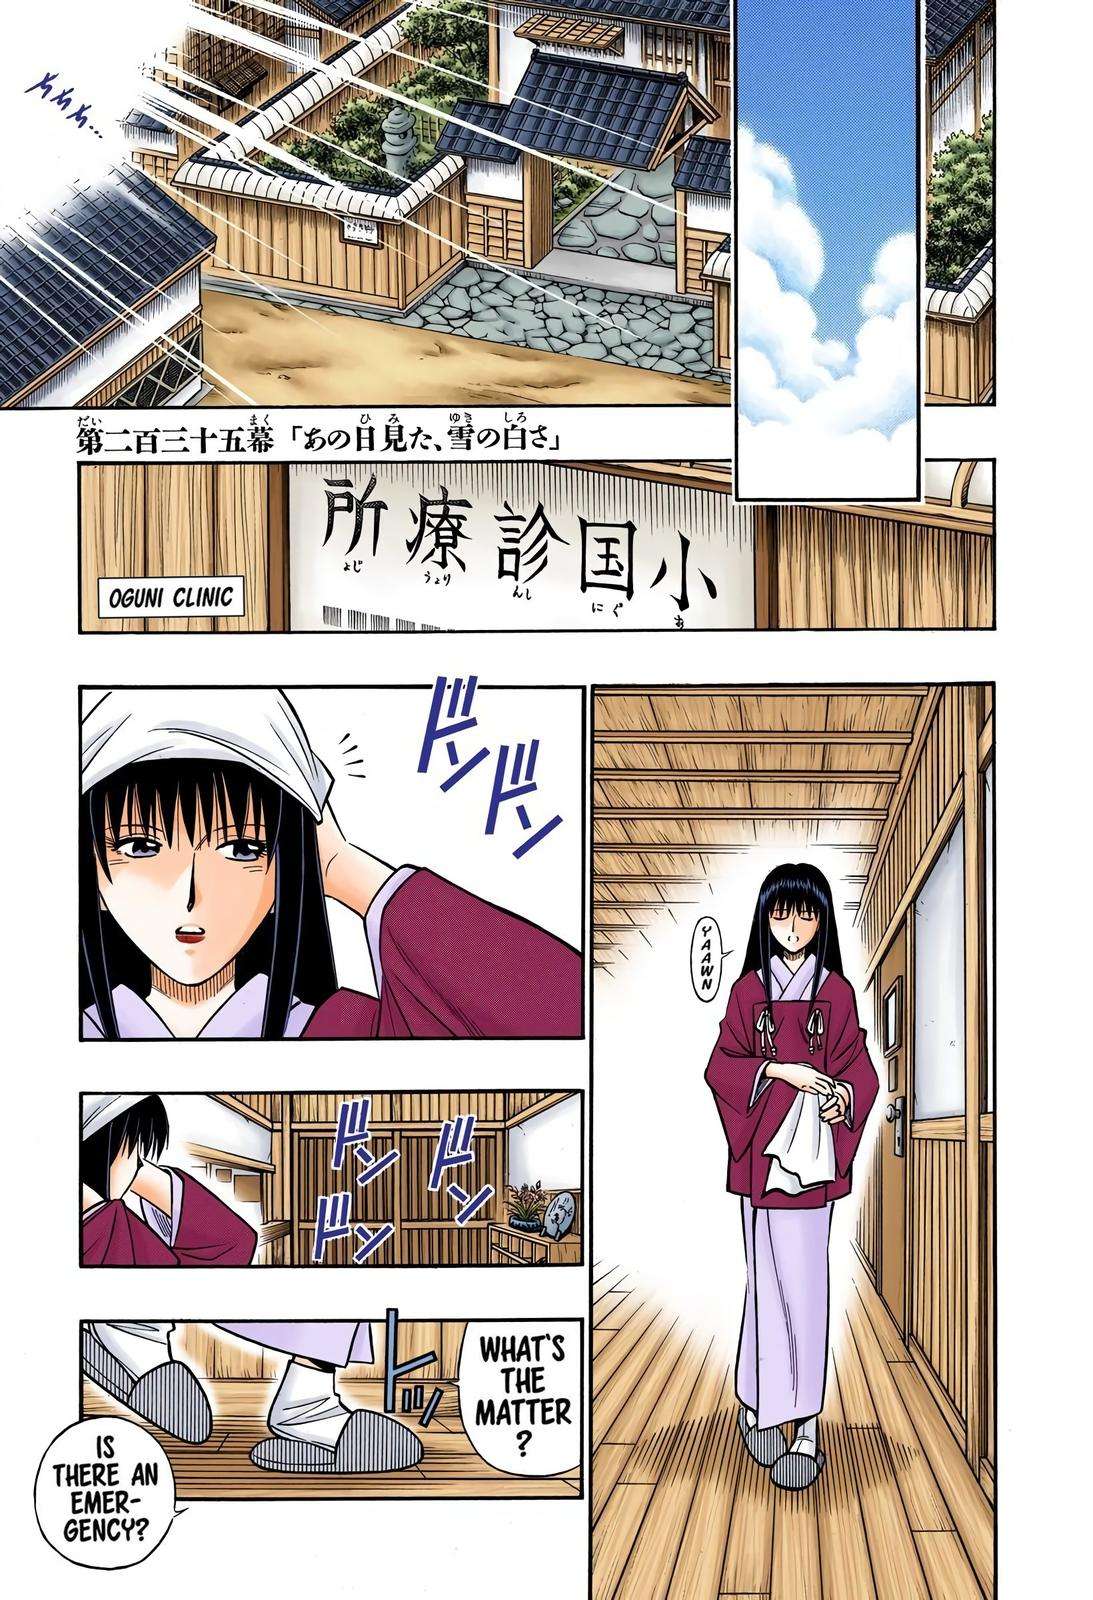 Rurouni Kenshin - Digital Colored Comics - chapter 235 - #1